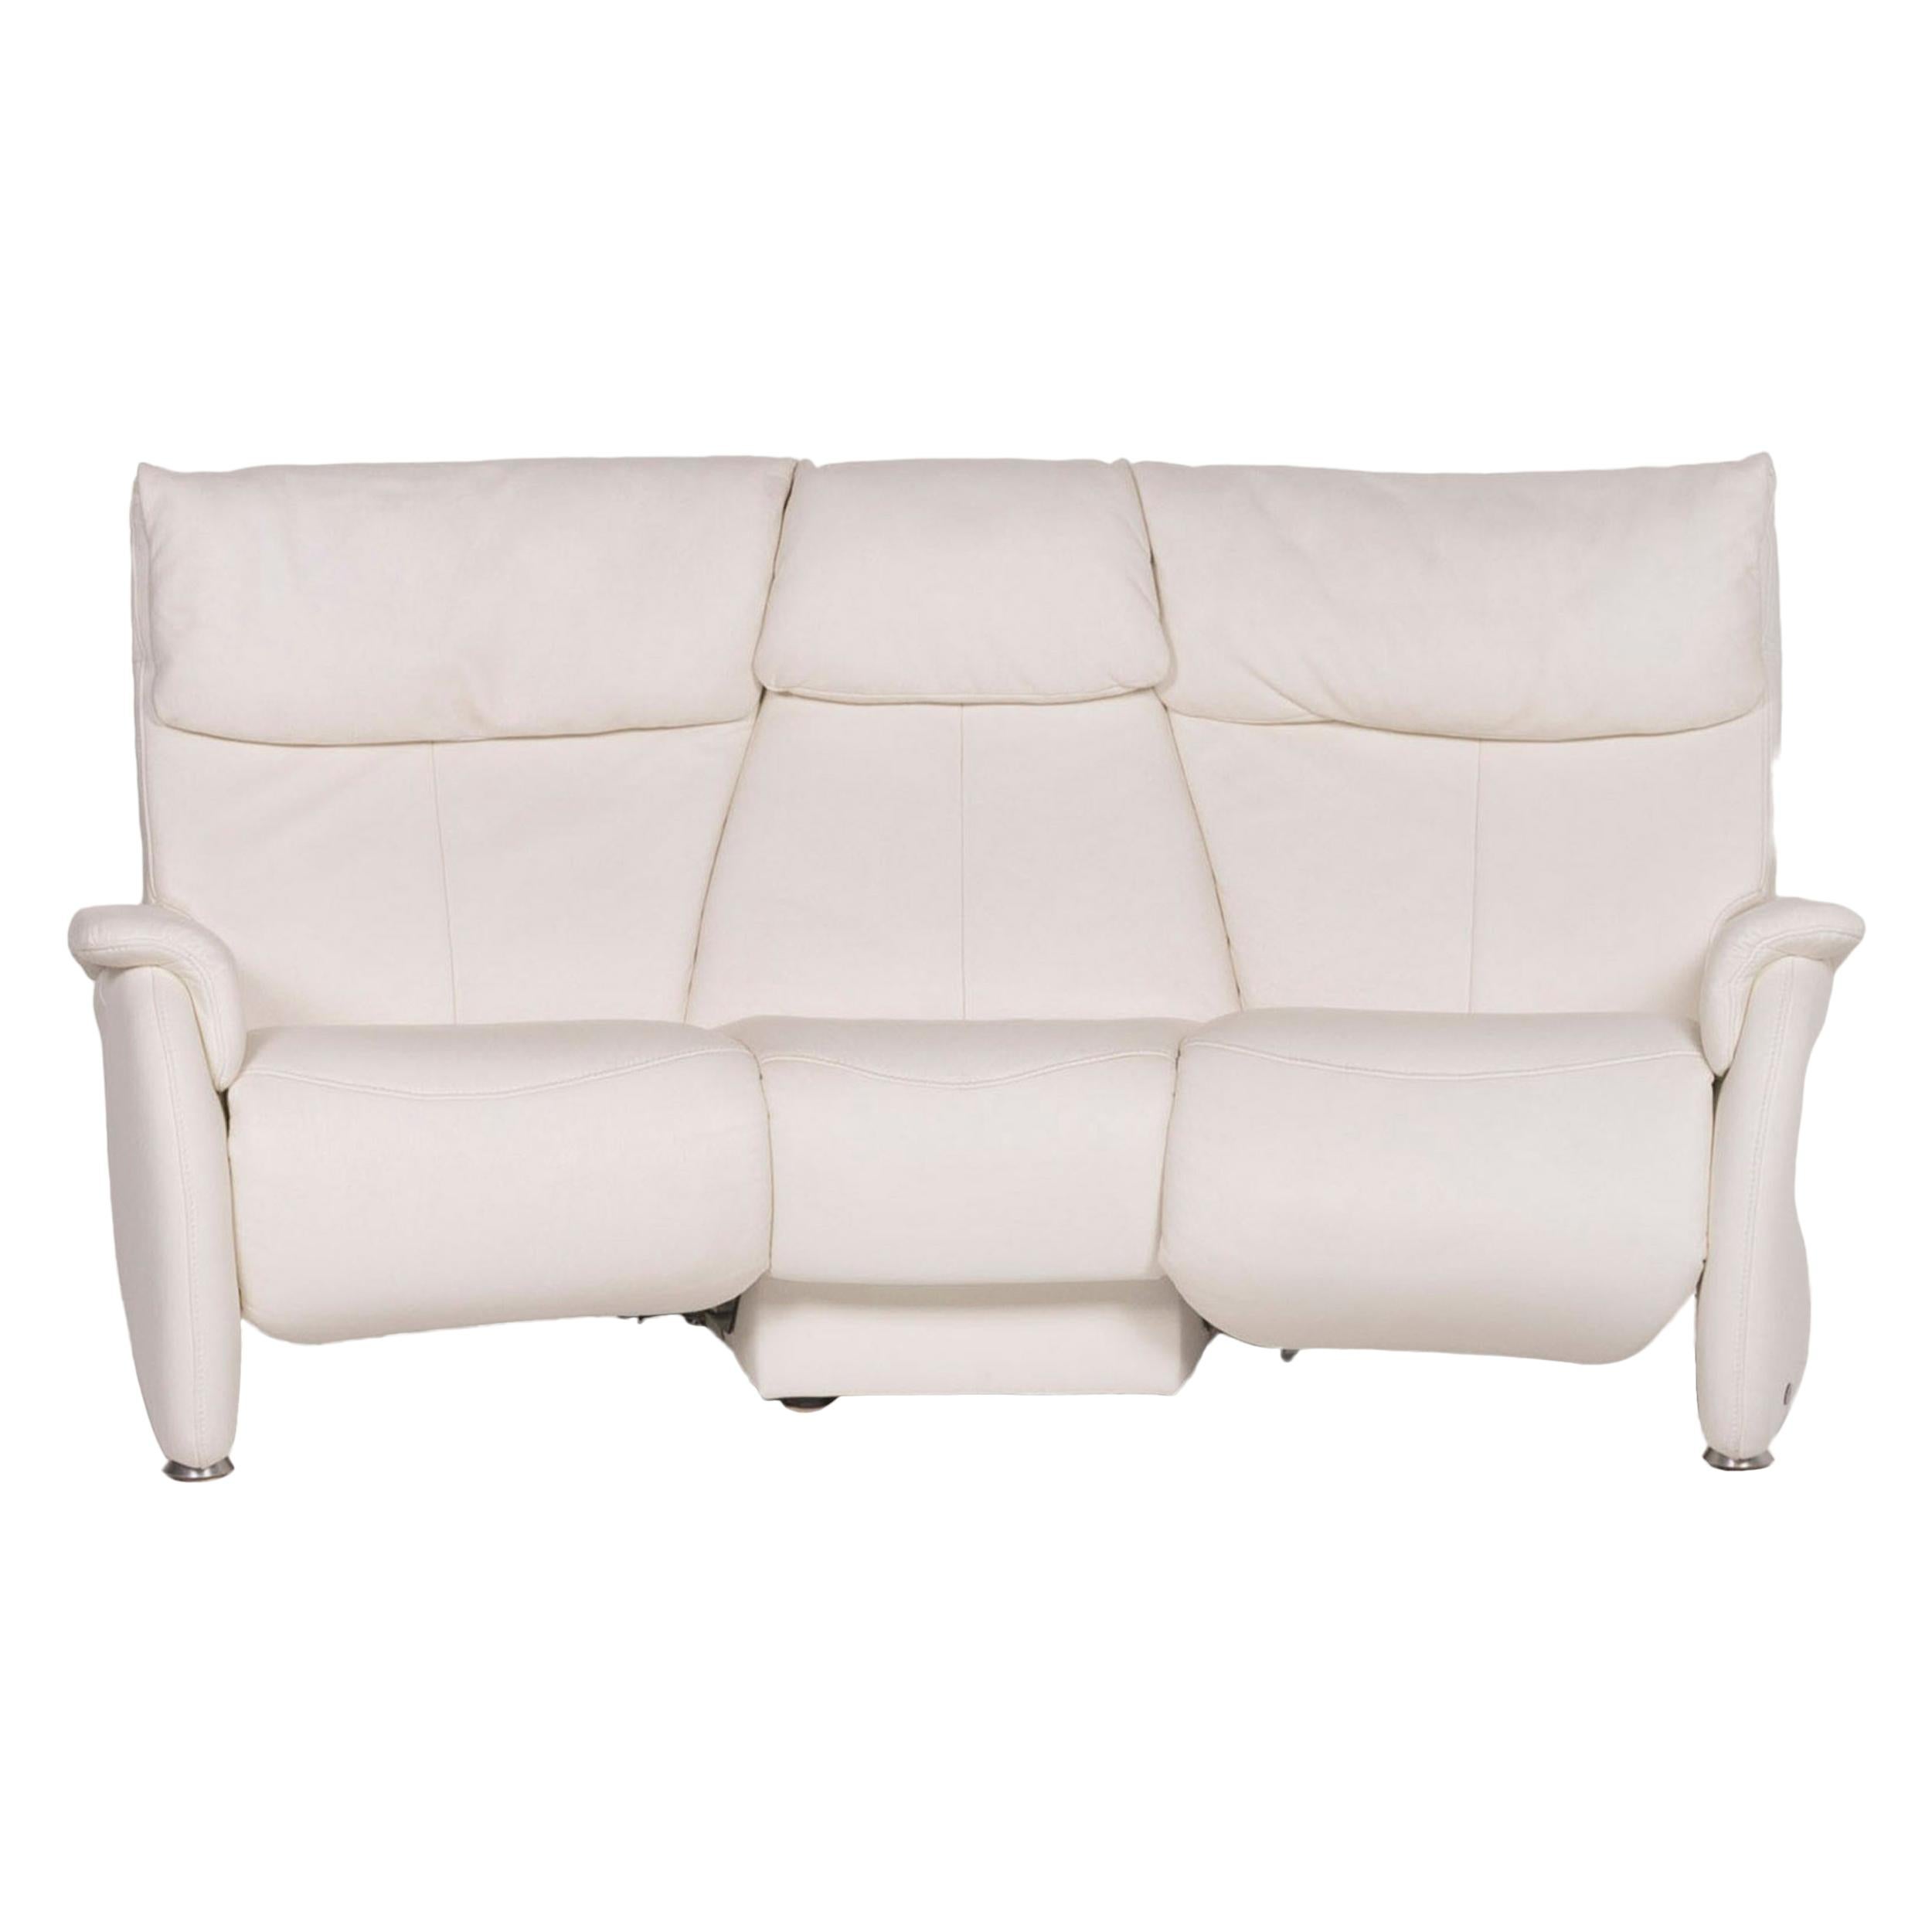 Himolla Trapeze Leather Sofa White Three-Seat Incl. Function